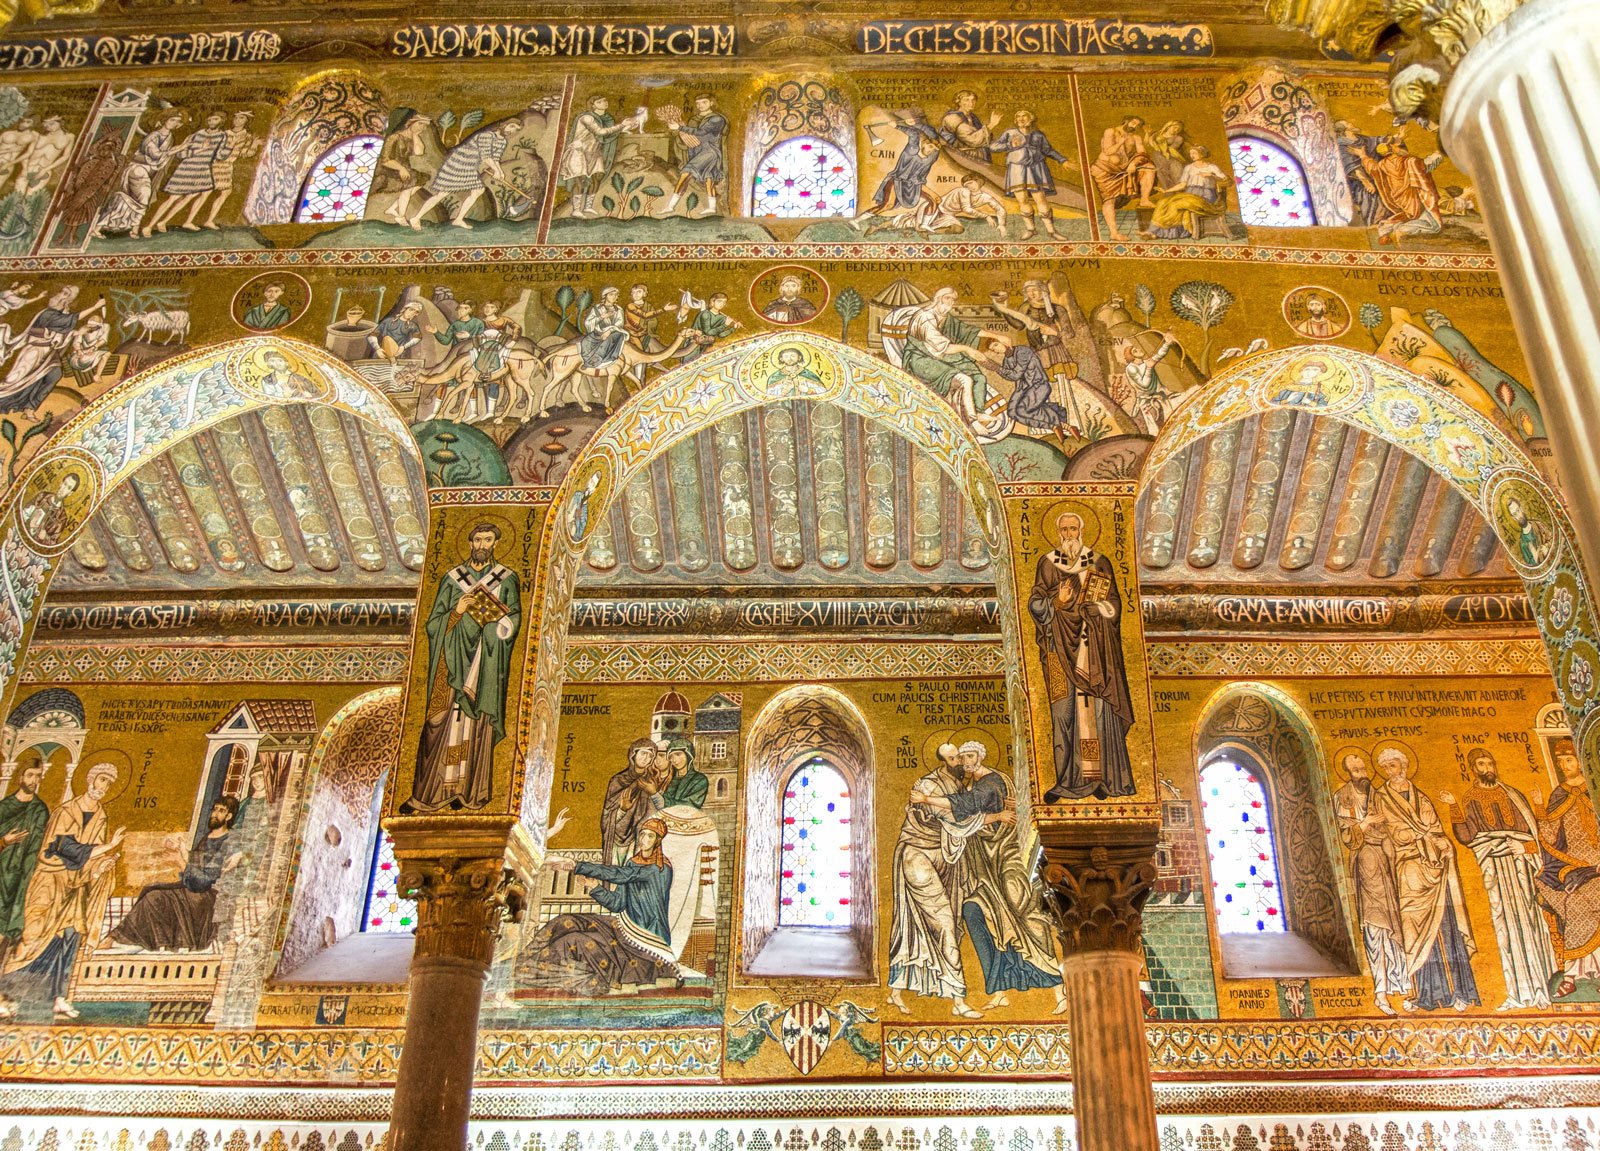 The glittering mosaics of Palermo's Palatine Chapel (photo: Andrea S, Flickr)